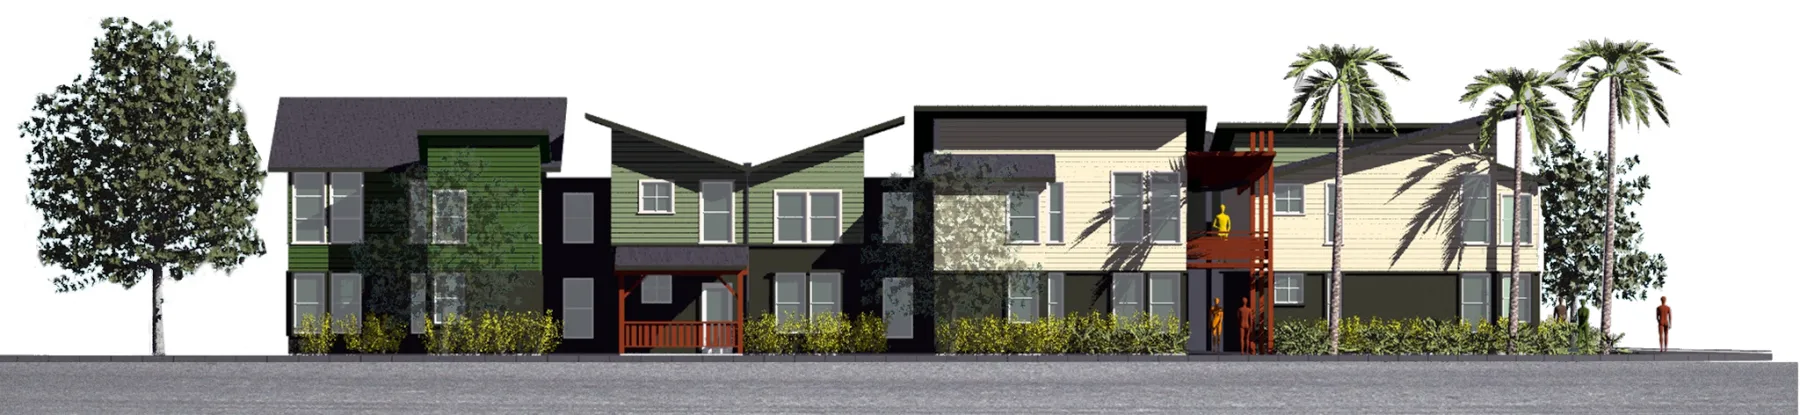 West elevation rendering for Stoney Pine Villa in Sunnyvale, California.